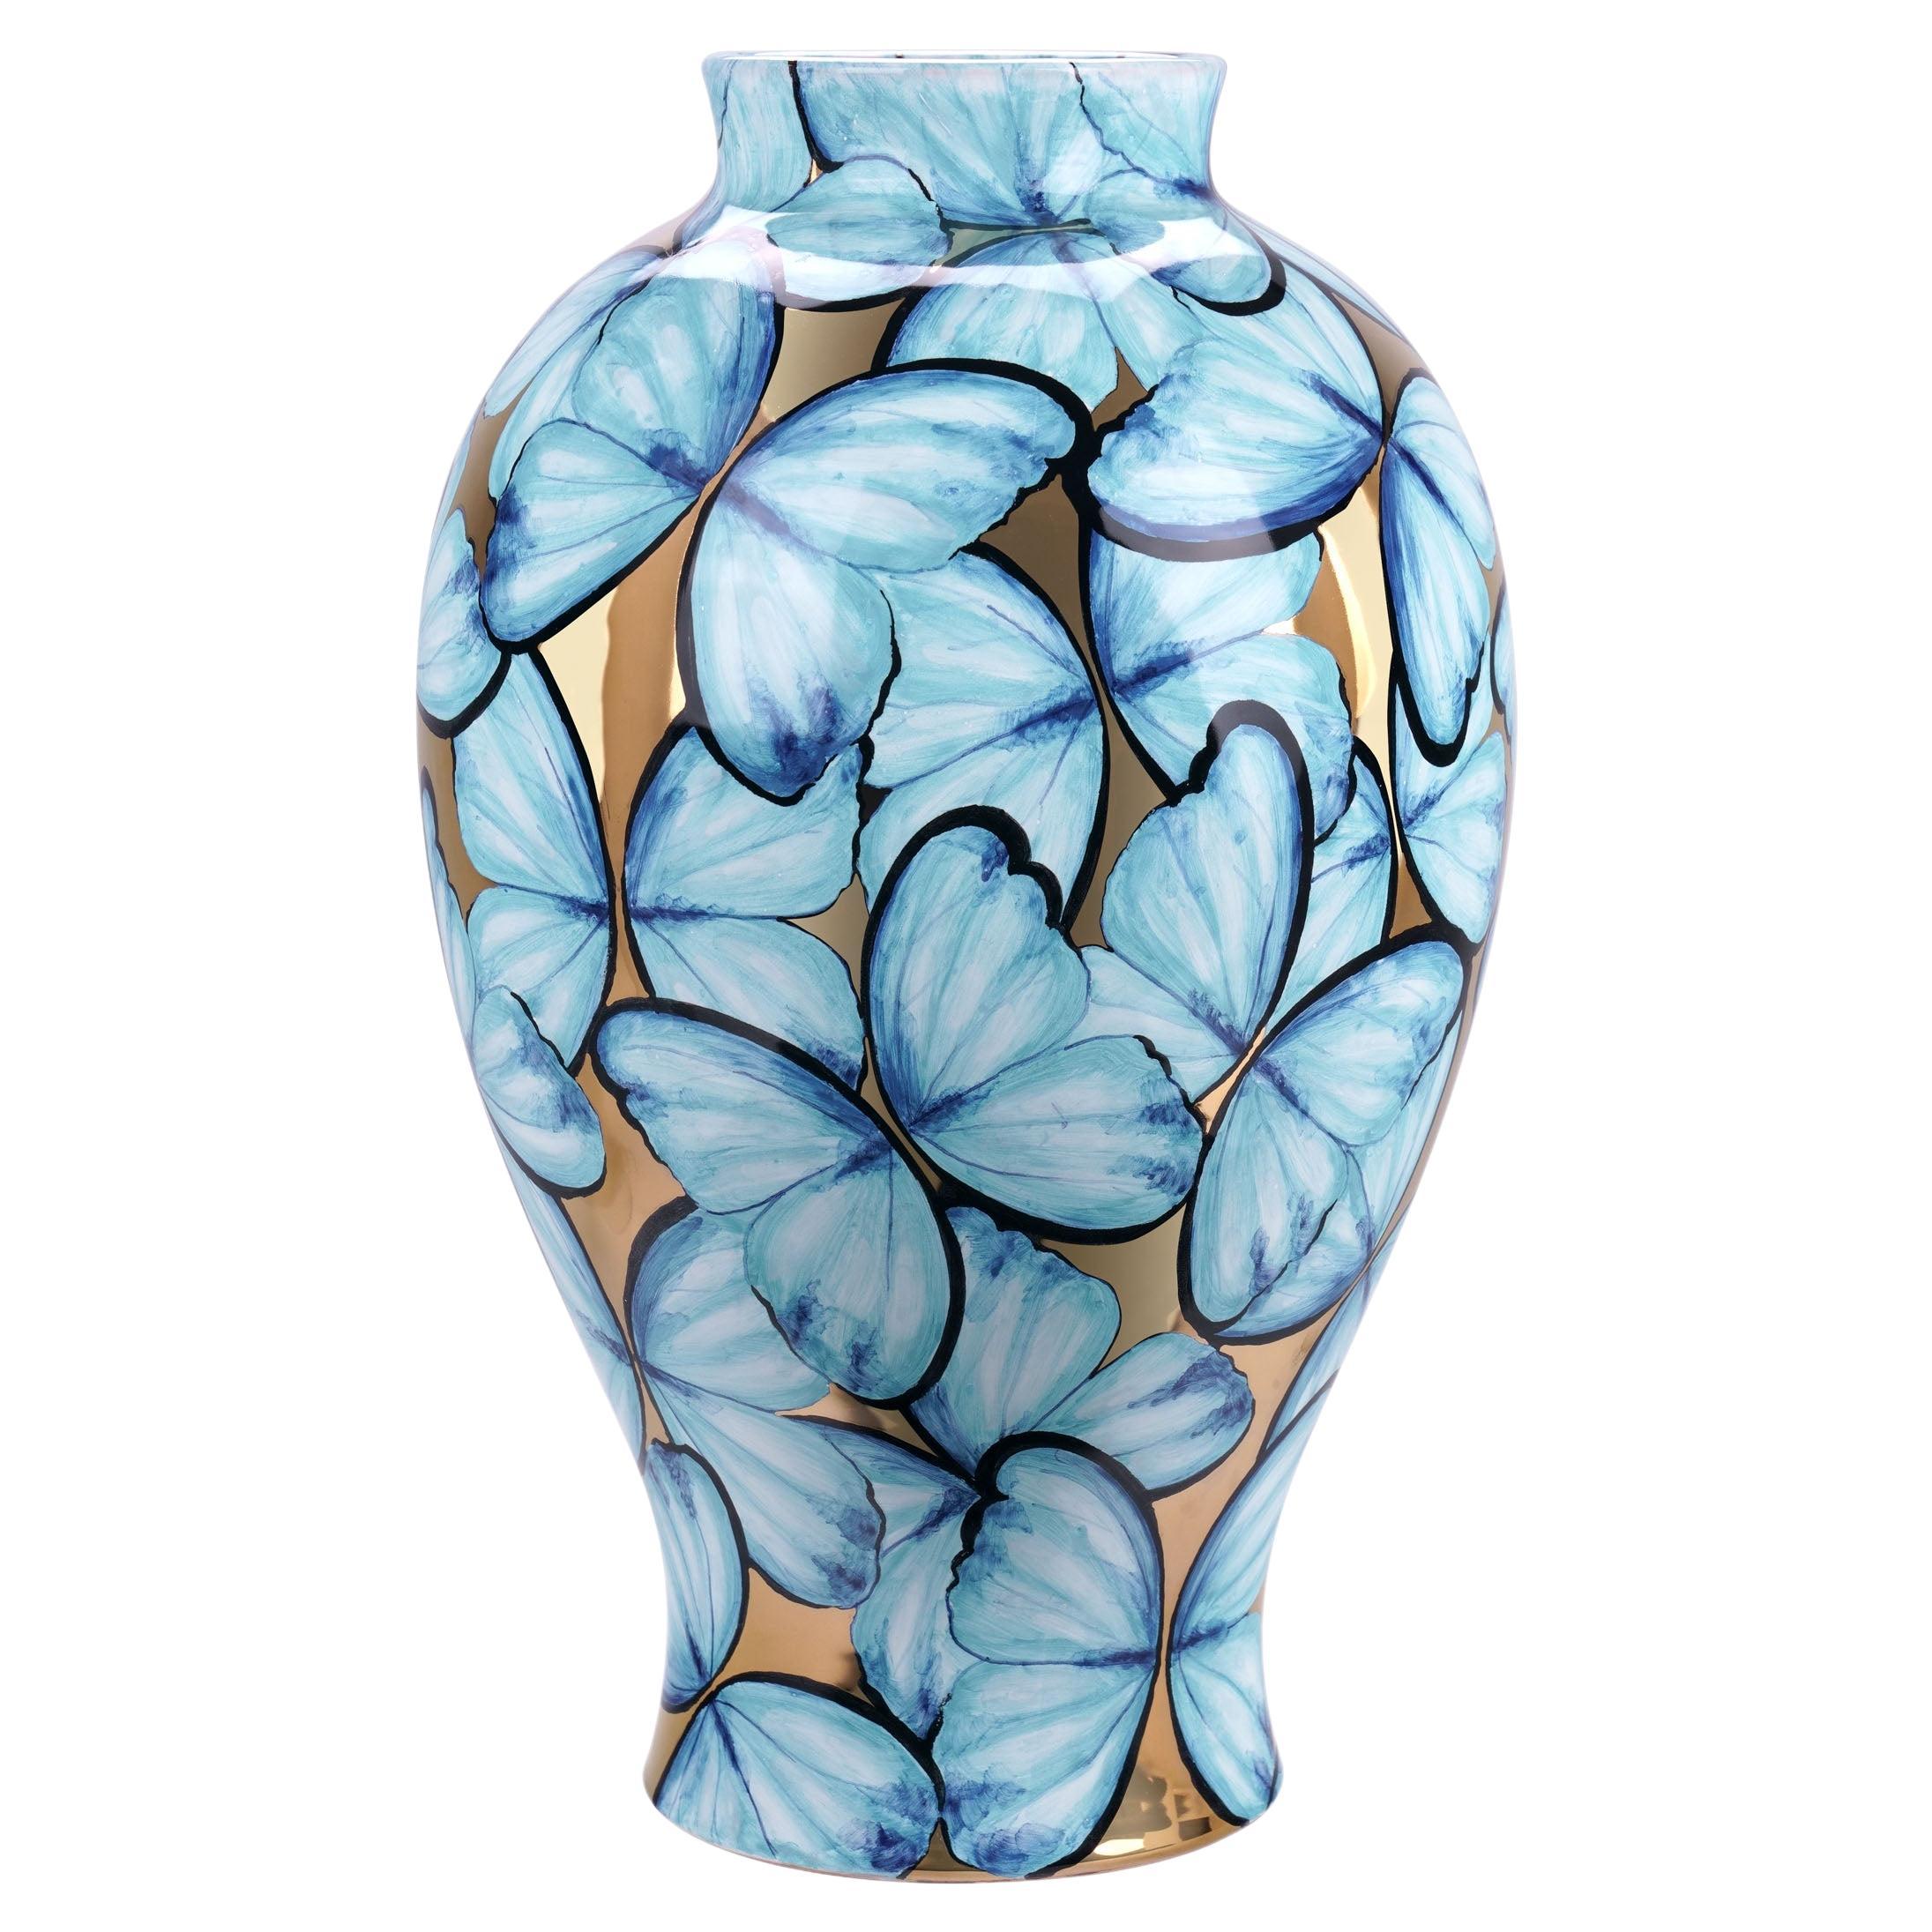 Blaue Keramikvase Schmetterlinge 24 Kt Gold Lüster Handbemaltes dekoratives Gefäß